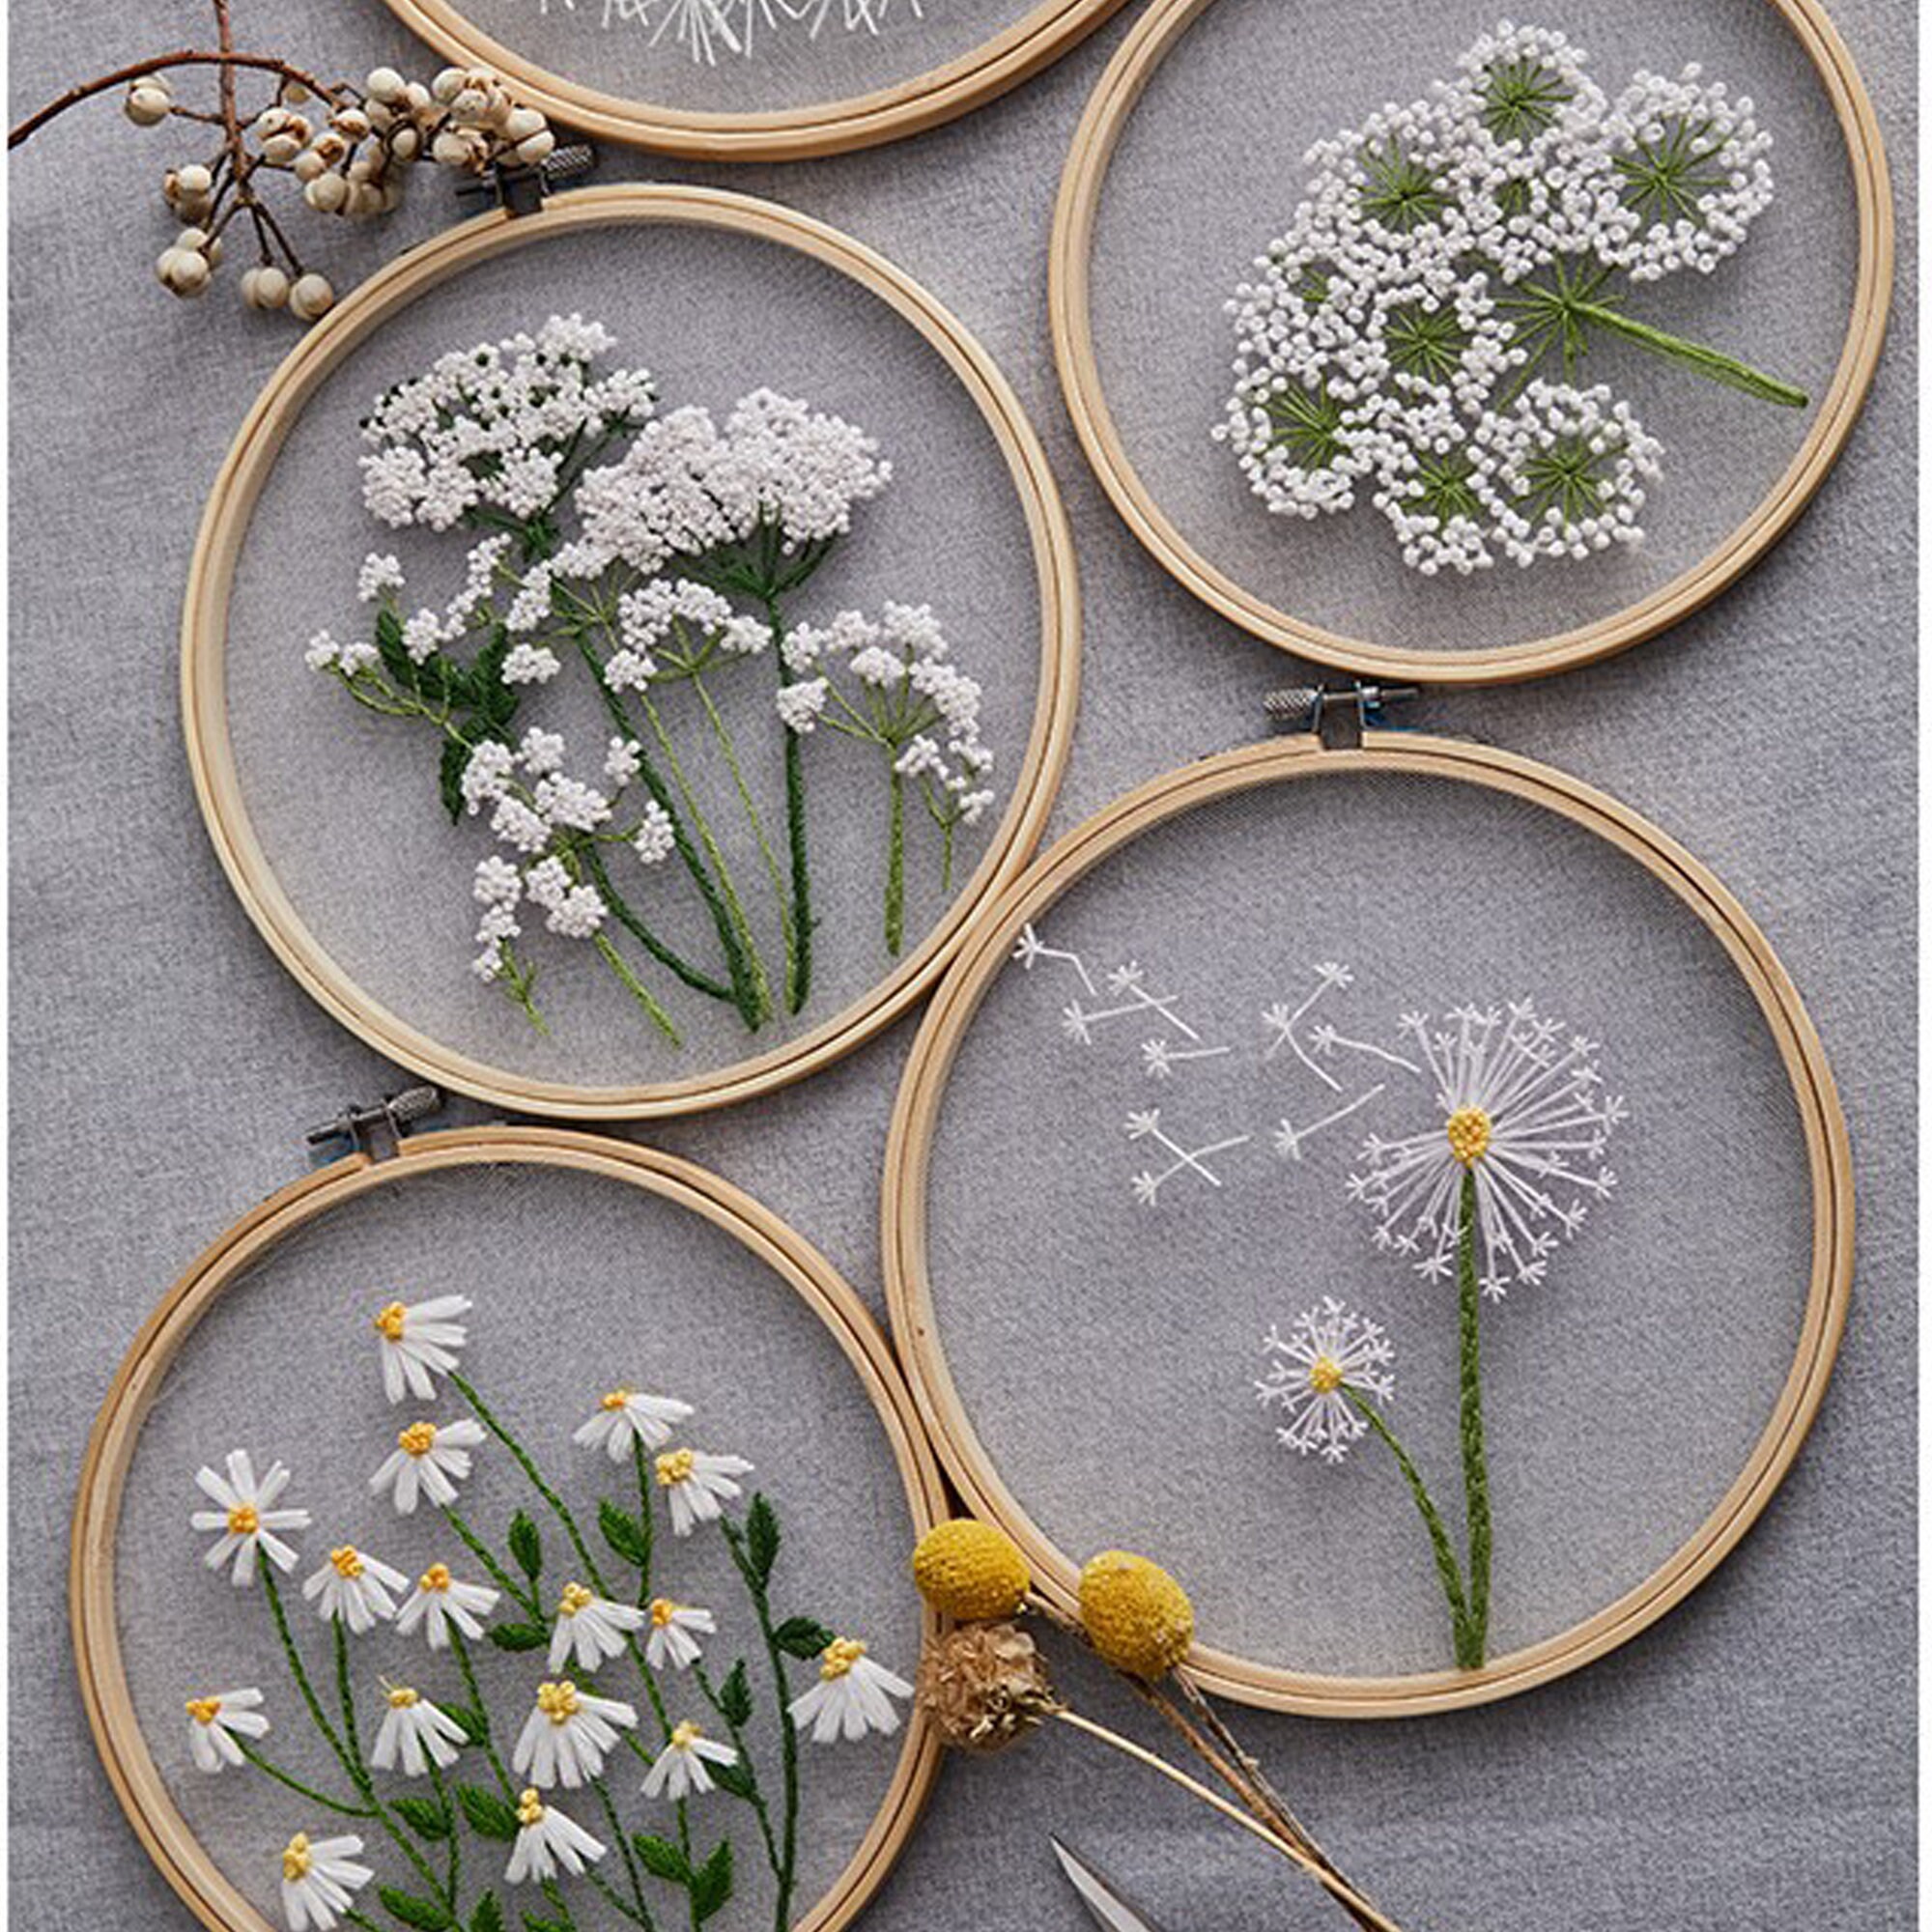 1 Set Embroidery Starter Kit Multipurpose DIY Delicate Patterns Embroidery  Christmas Pattern Cross Stitch Set for Beginn 